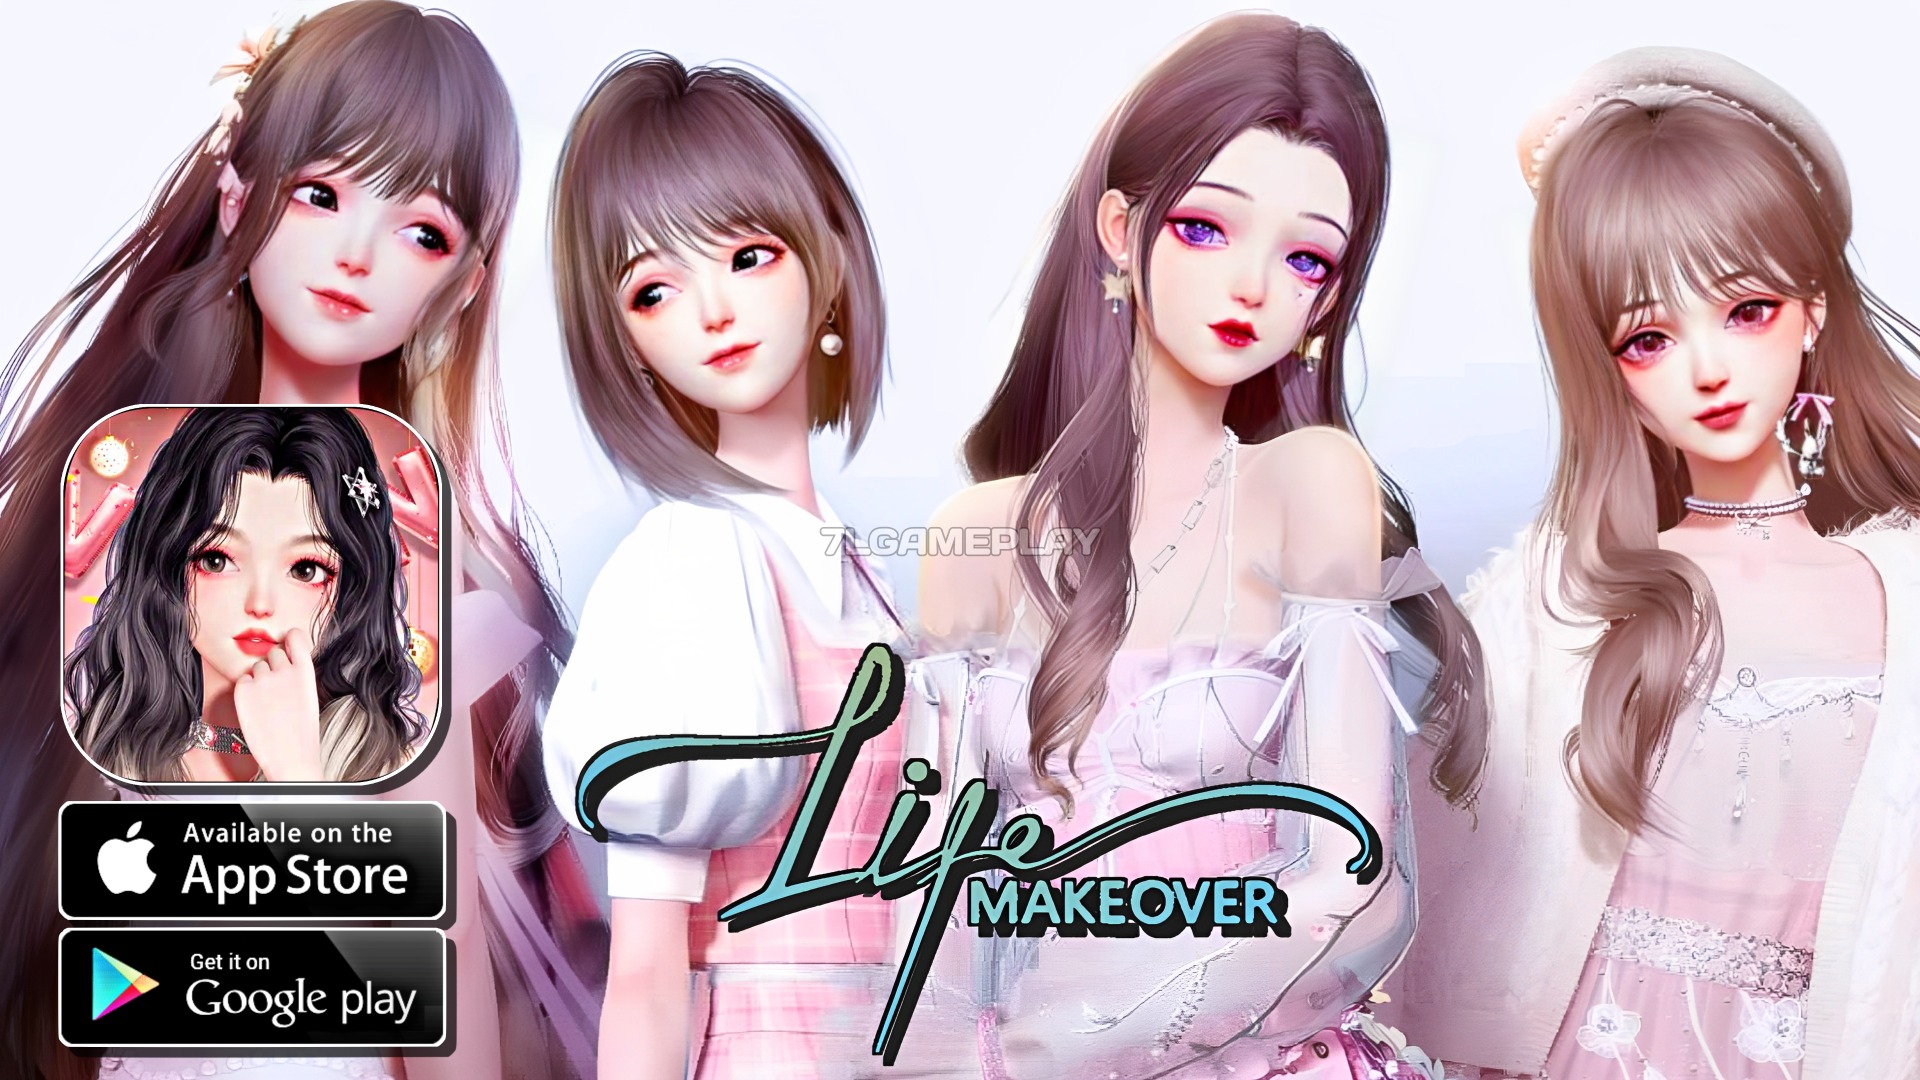 Life makeover коды. Life Makeover персонажи. Life Makeover игра. Life Makeover игра геймплей.